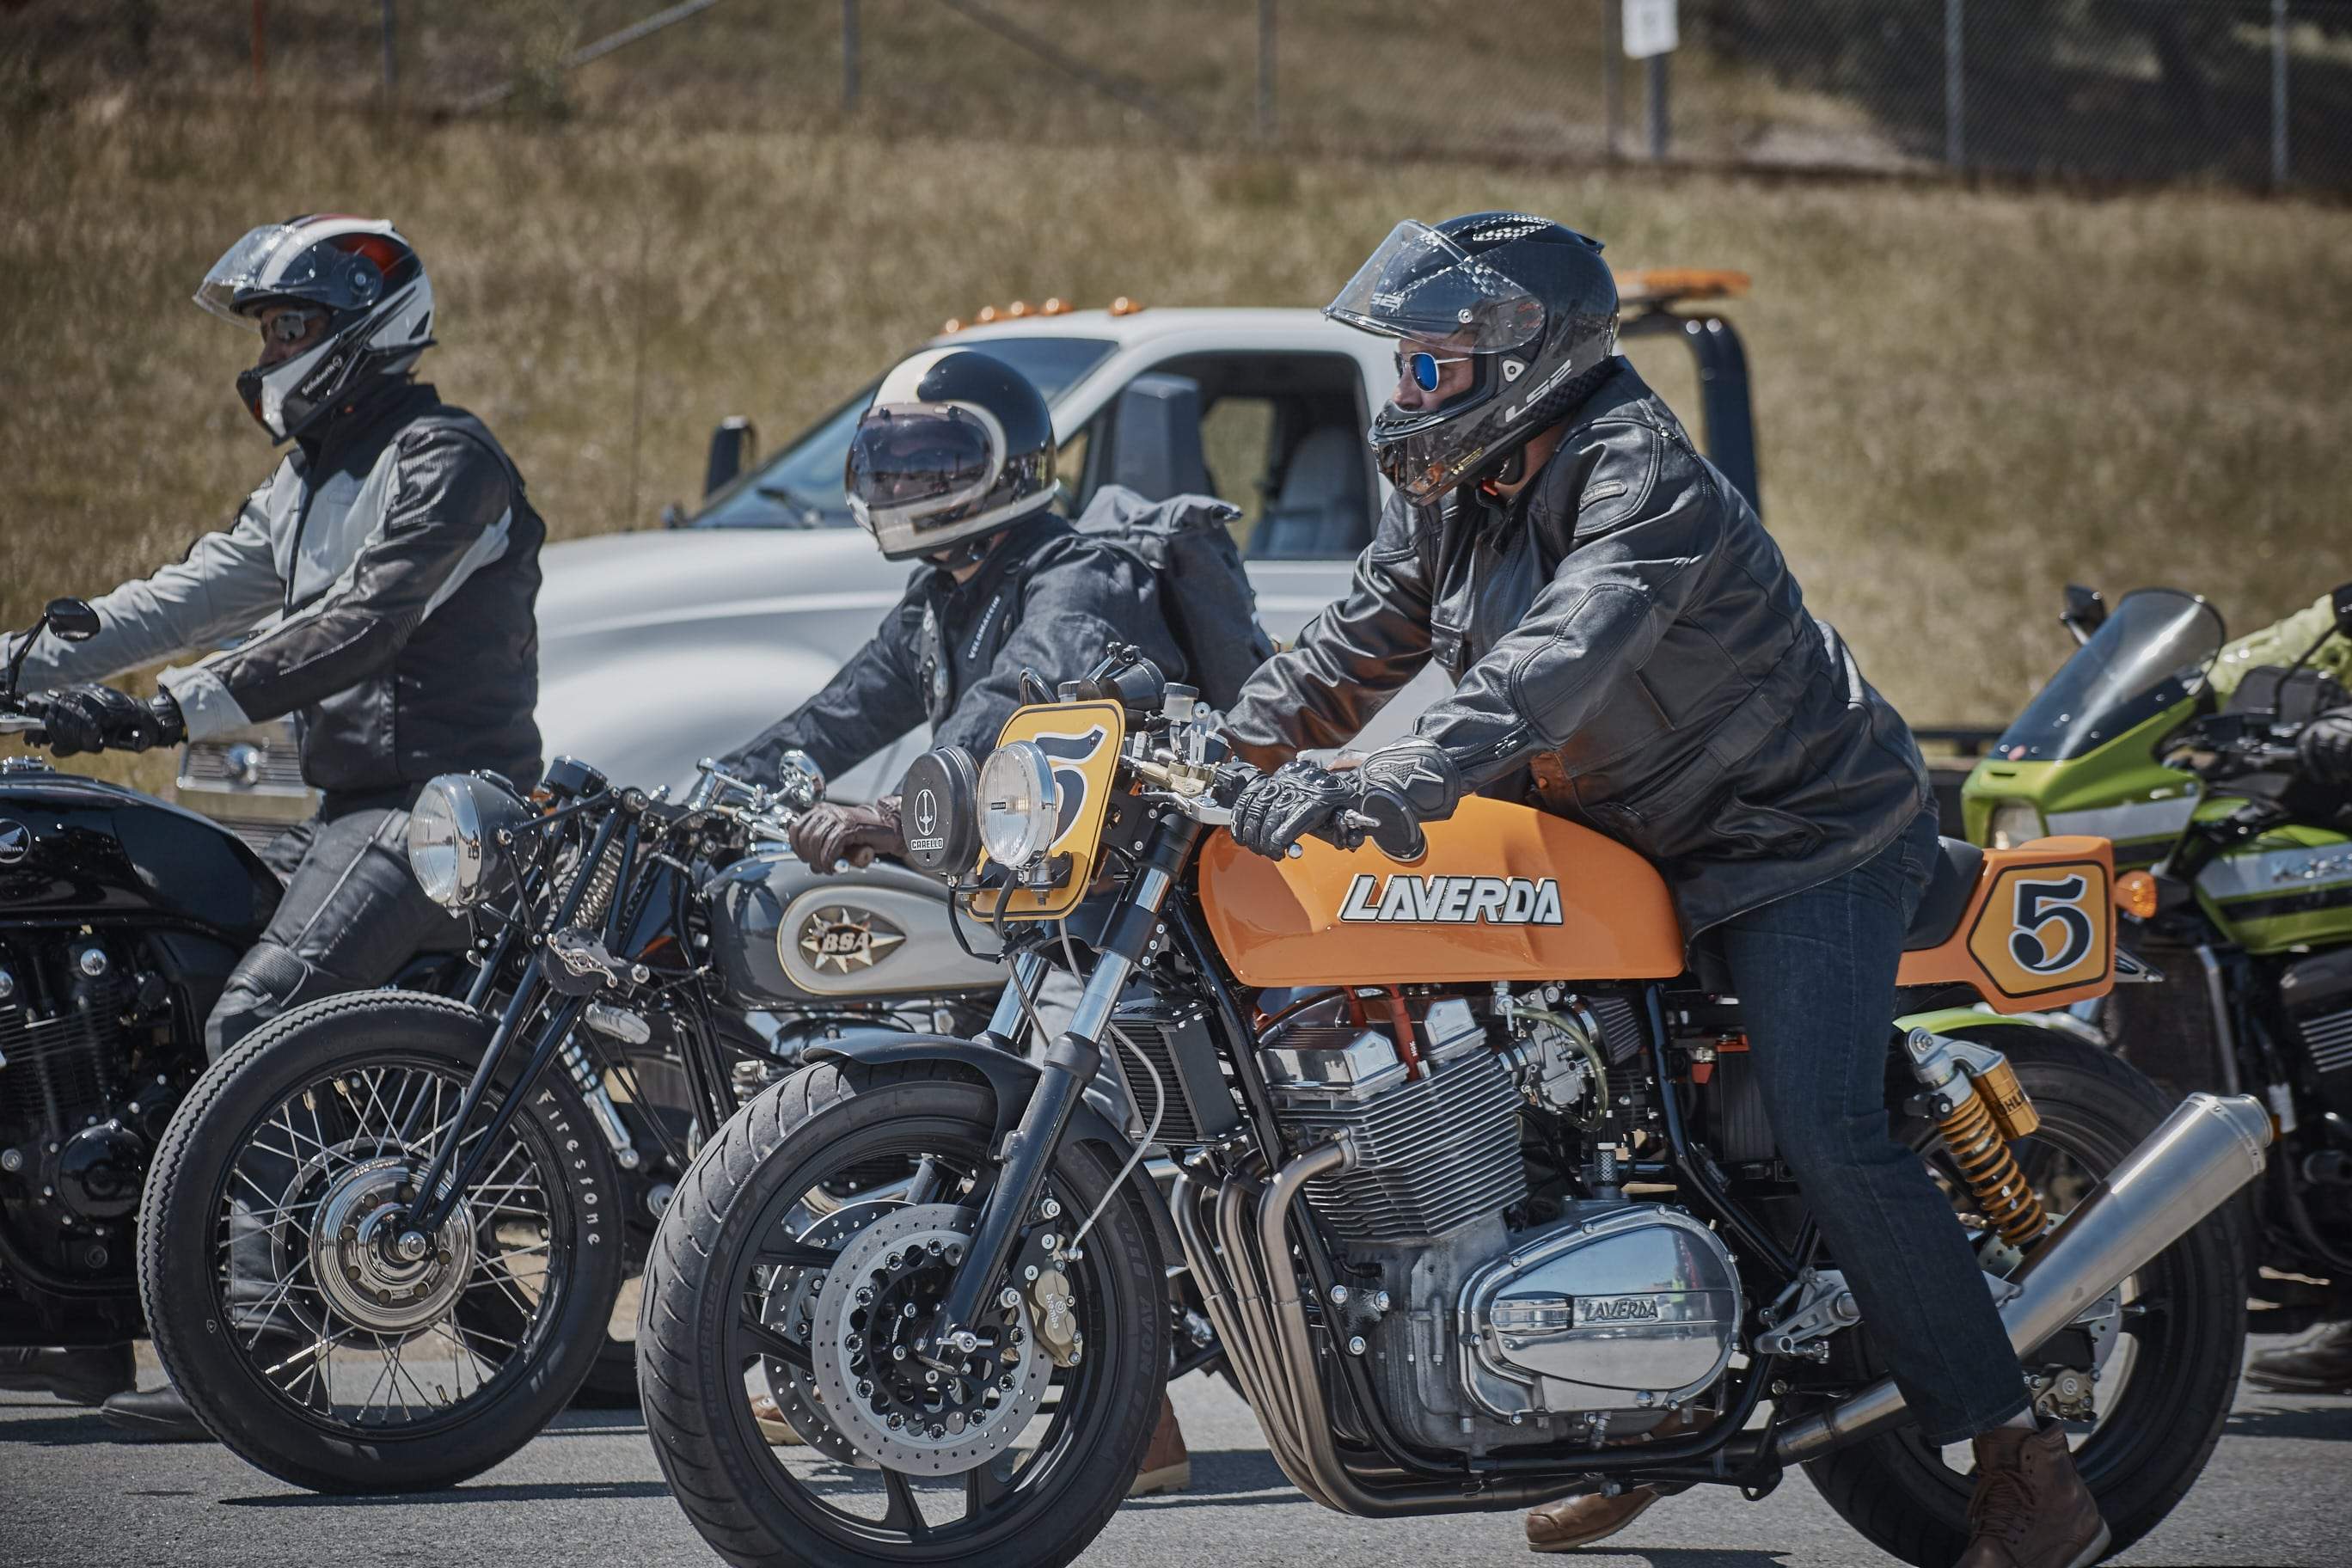 quail motorcycle gathering Carmel native moto adventures vintage classic ride laguna seca